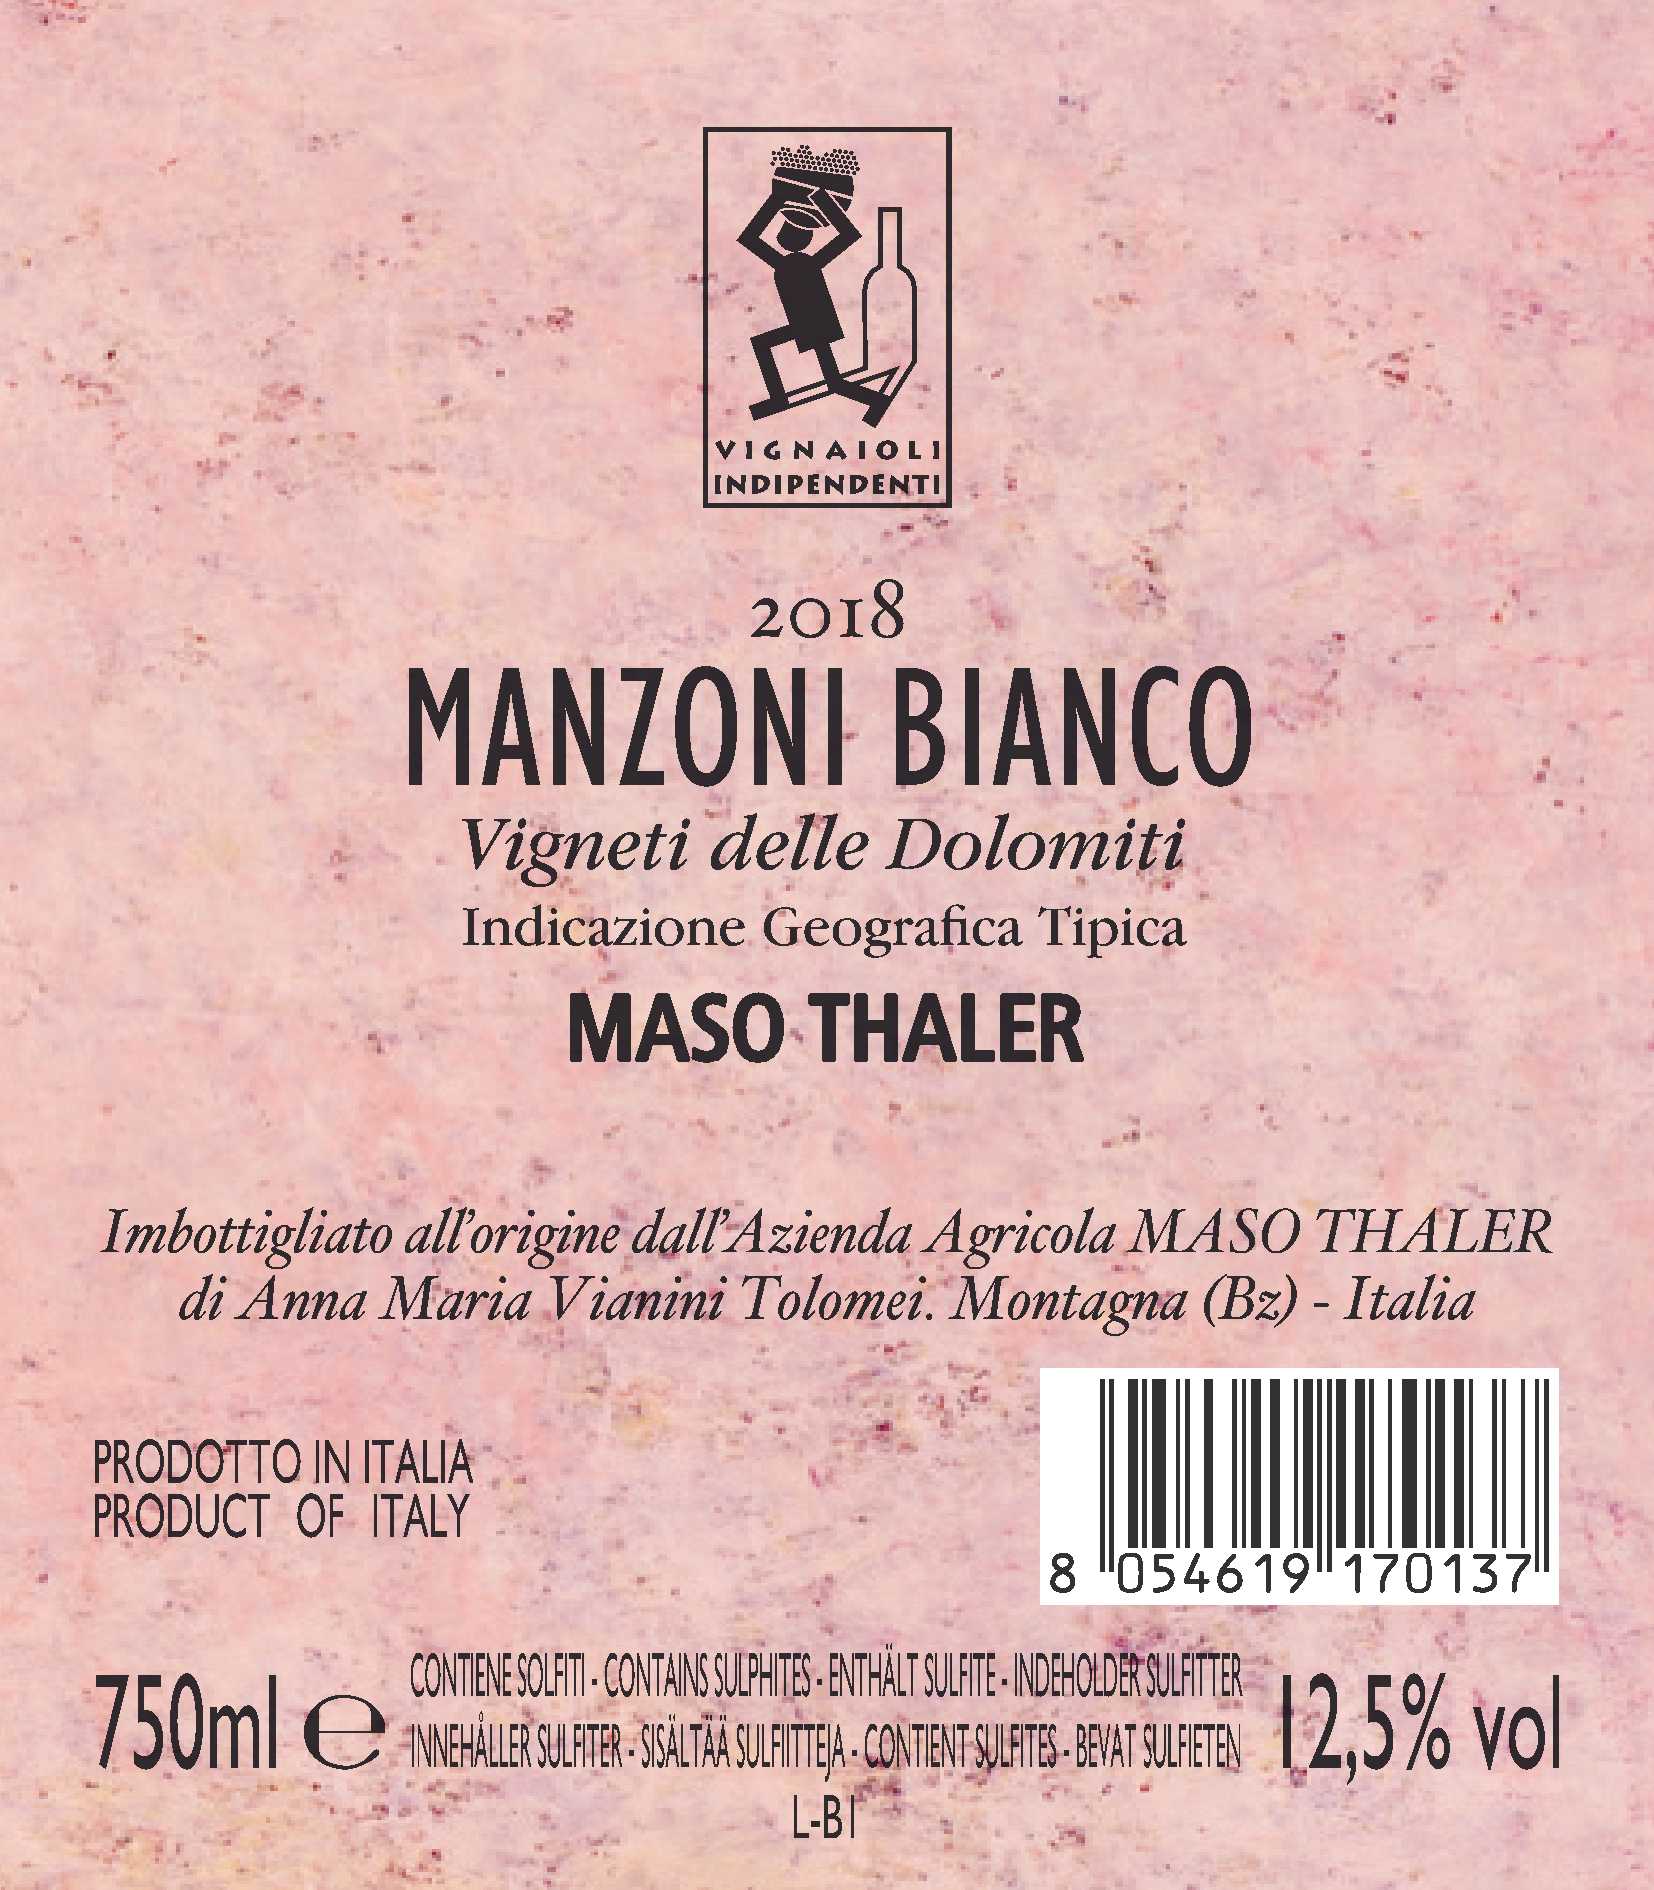 Ret Manzoni Bianco 18 170137.jpg